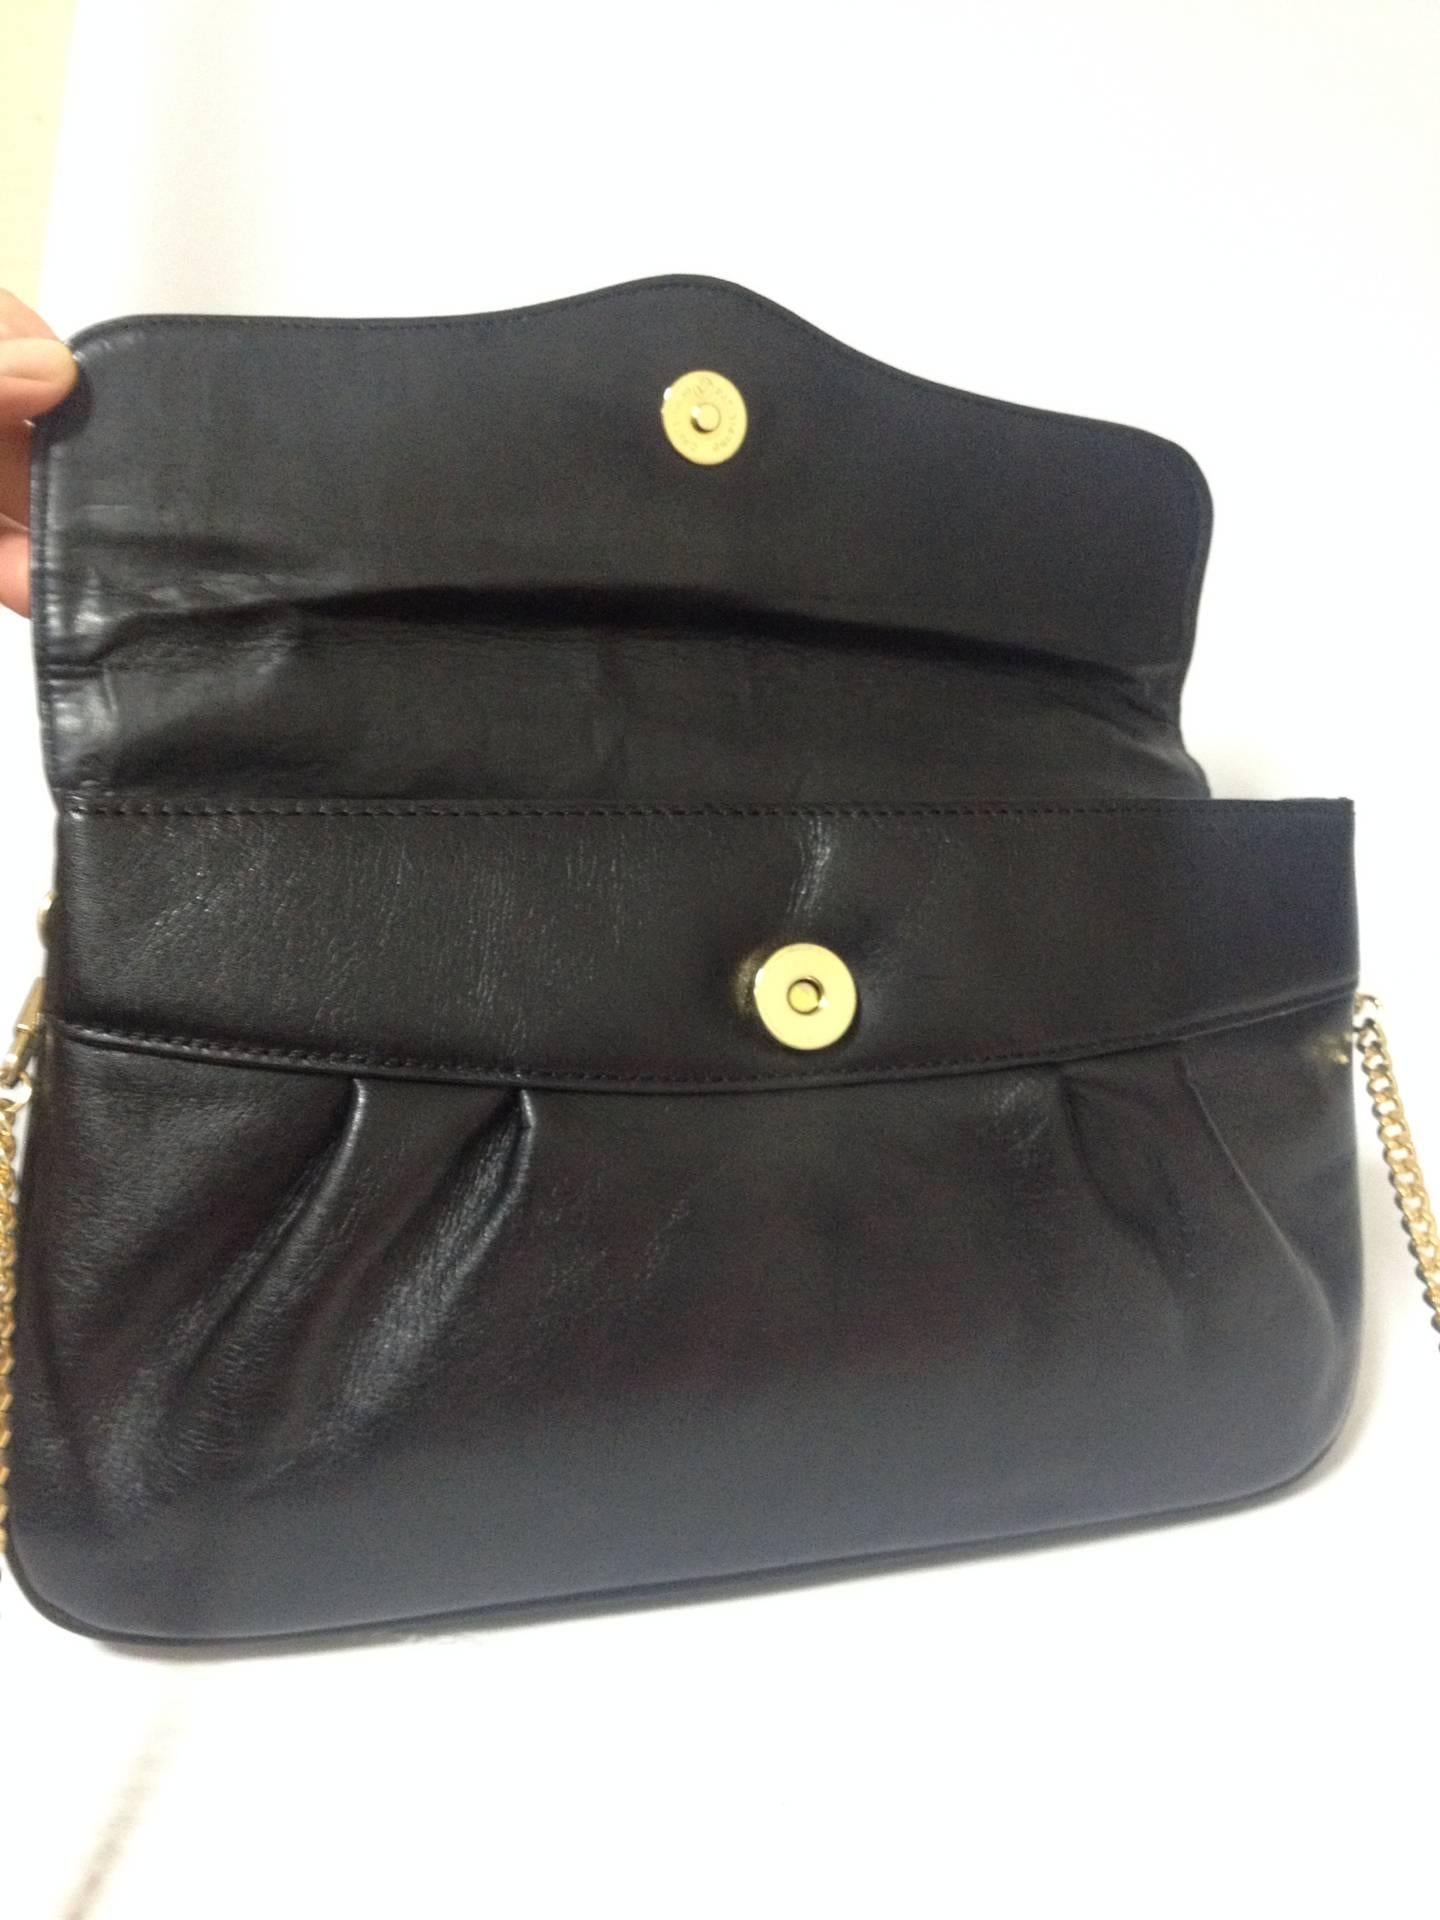 Black Vintage Christian Dior Vintage black leather clutch purse, mini bag, with chain.